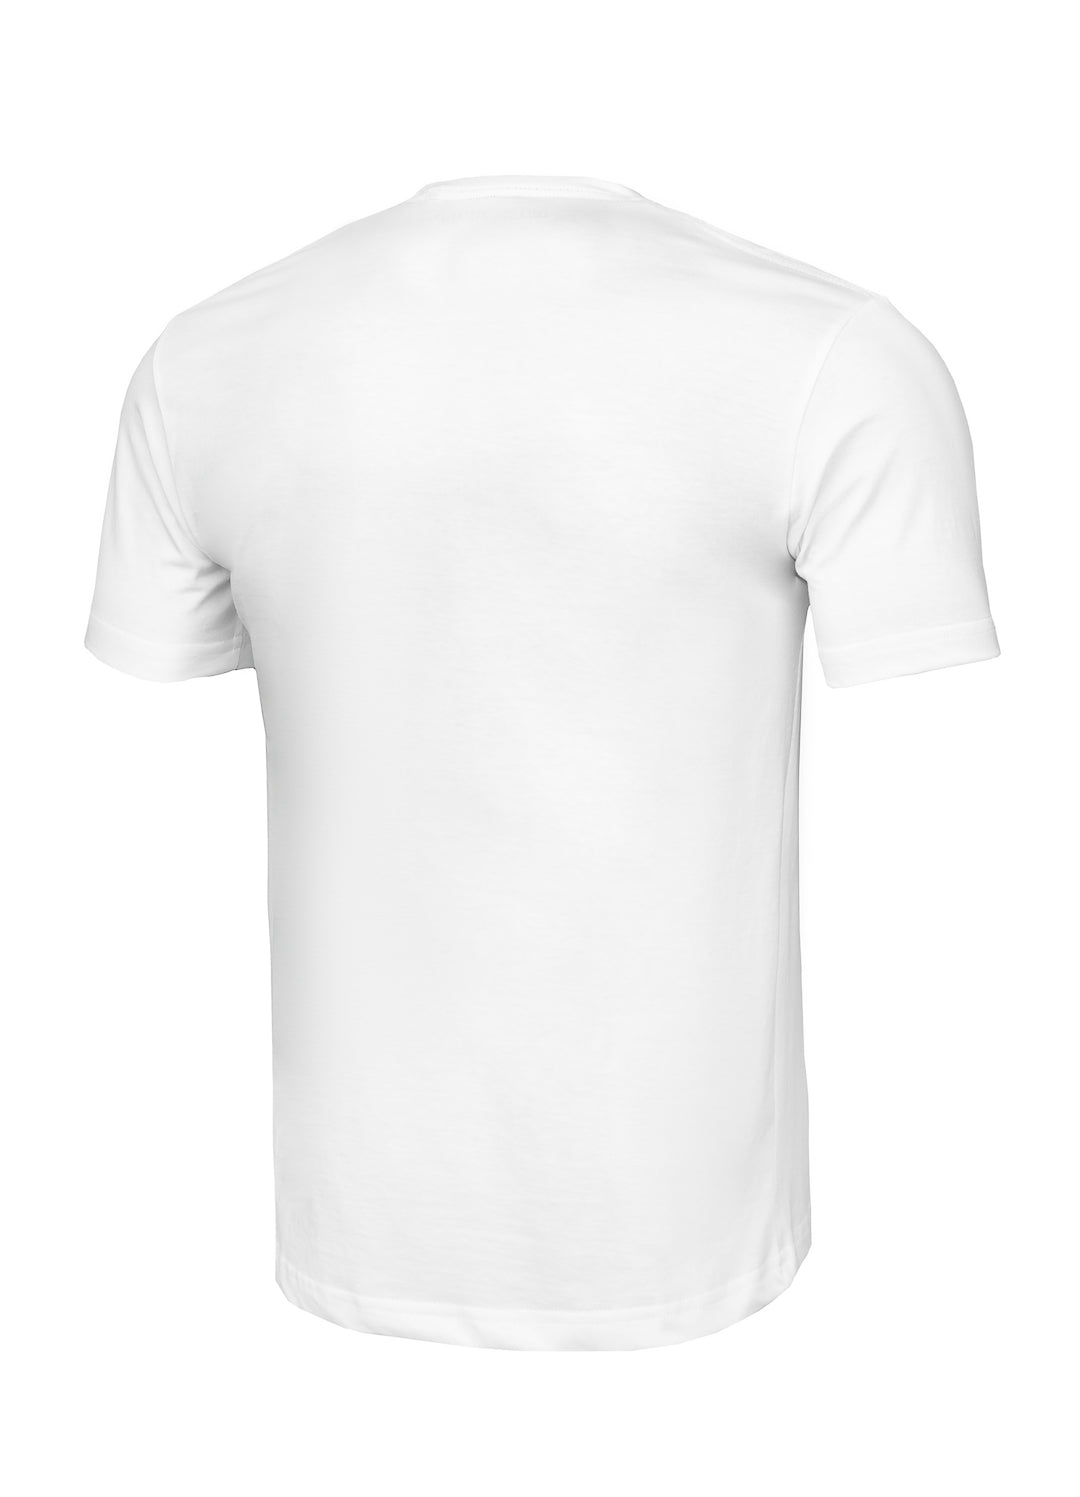 SMALL LOGO Lightweight White T-shirt.